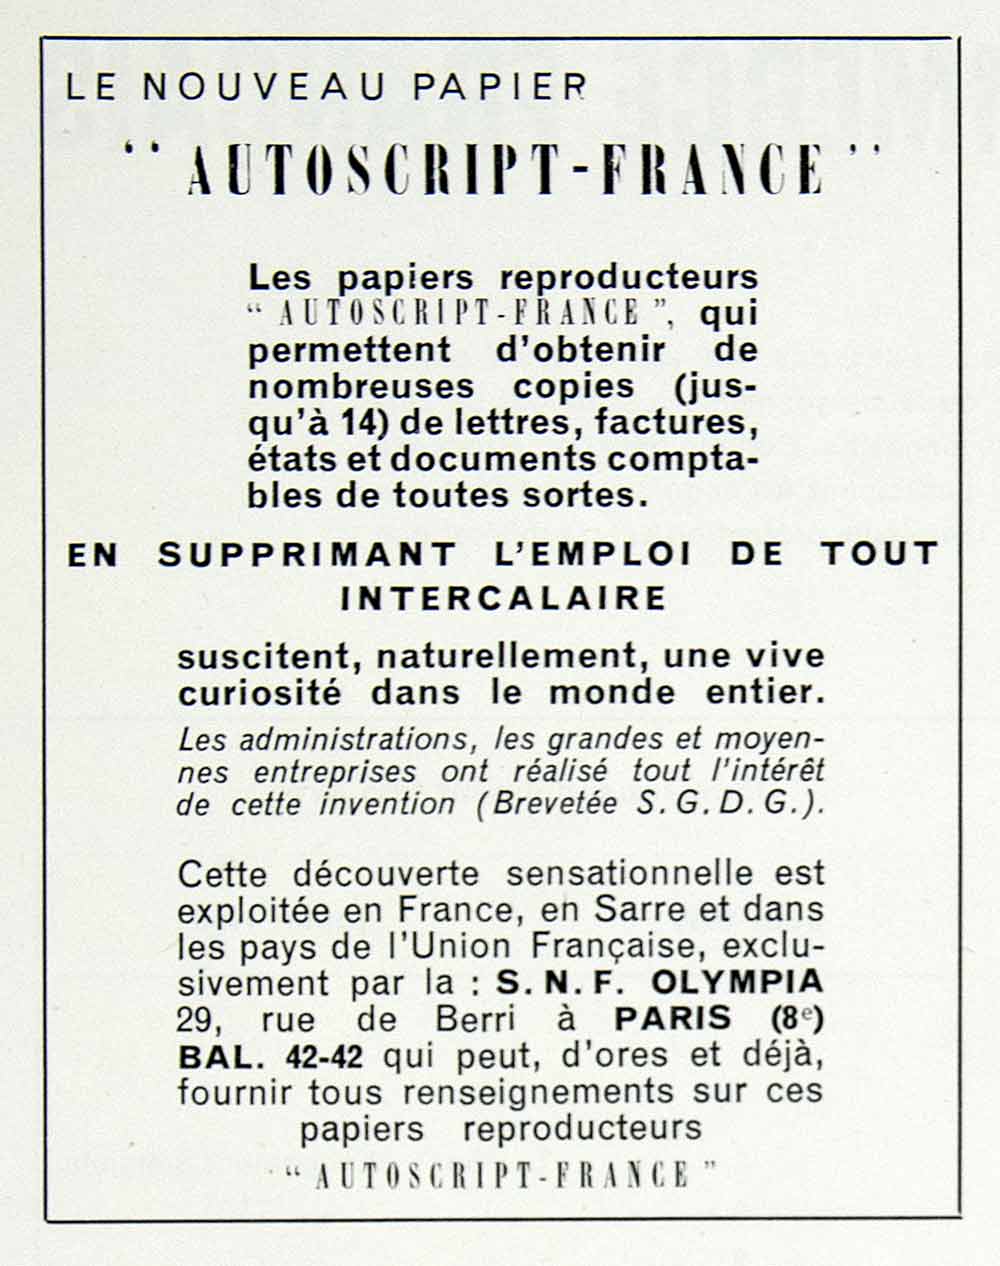 1955 Ad Autoscript-France Copy Paper French SNF Olympia 29 Rue de Berri VEN6